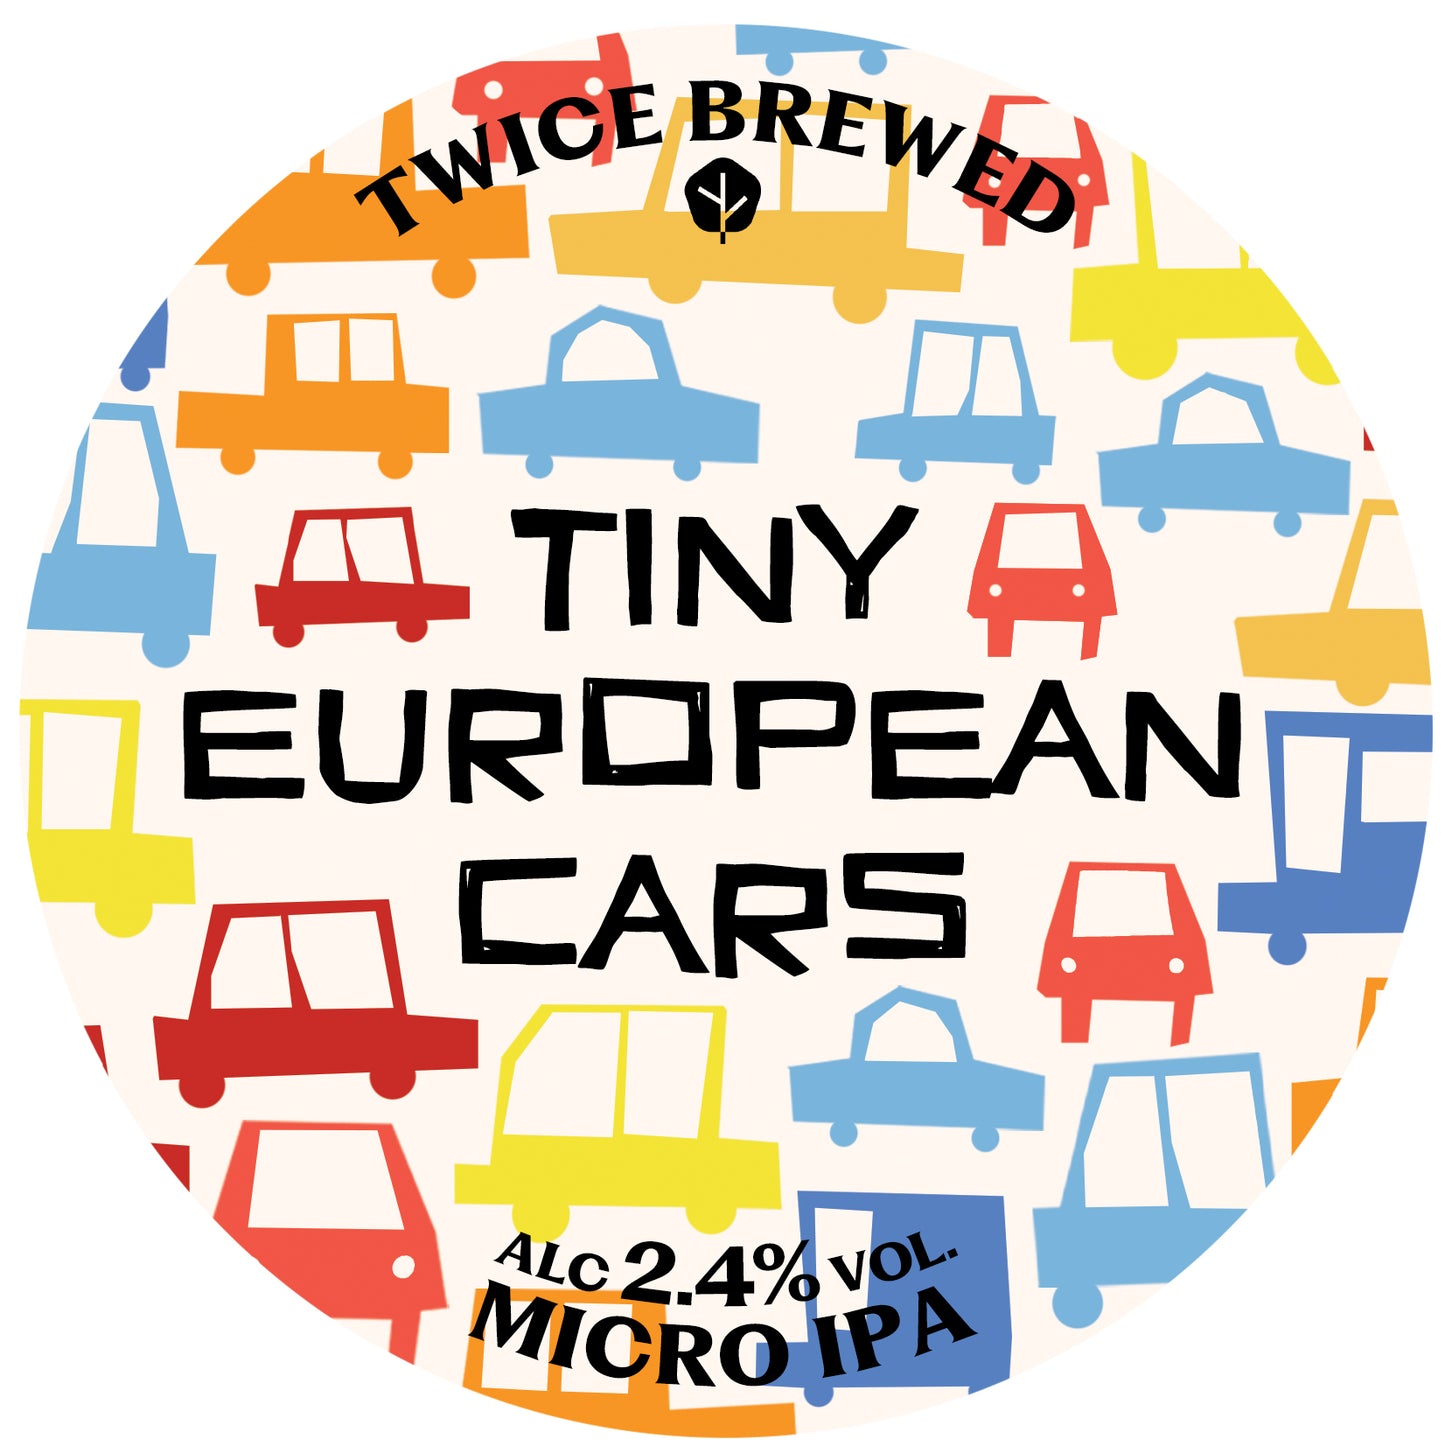 Tiny European Cars, Micro IPA, 2.4% - 440ml Can